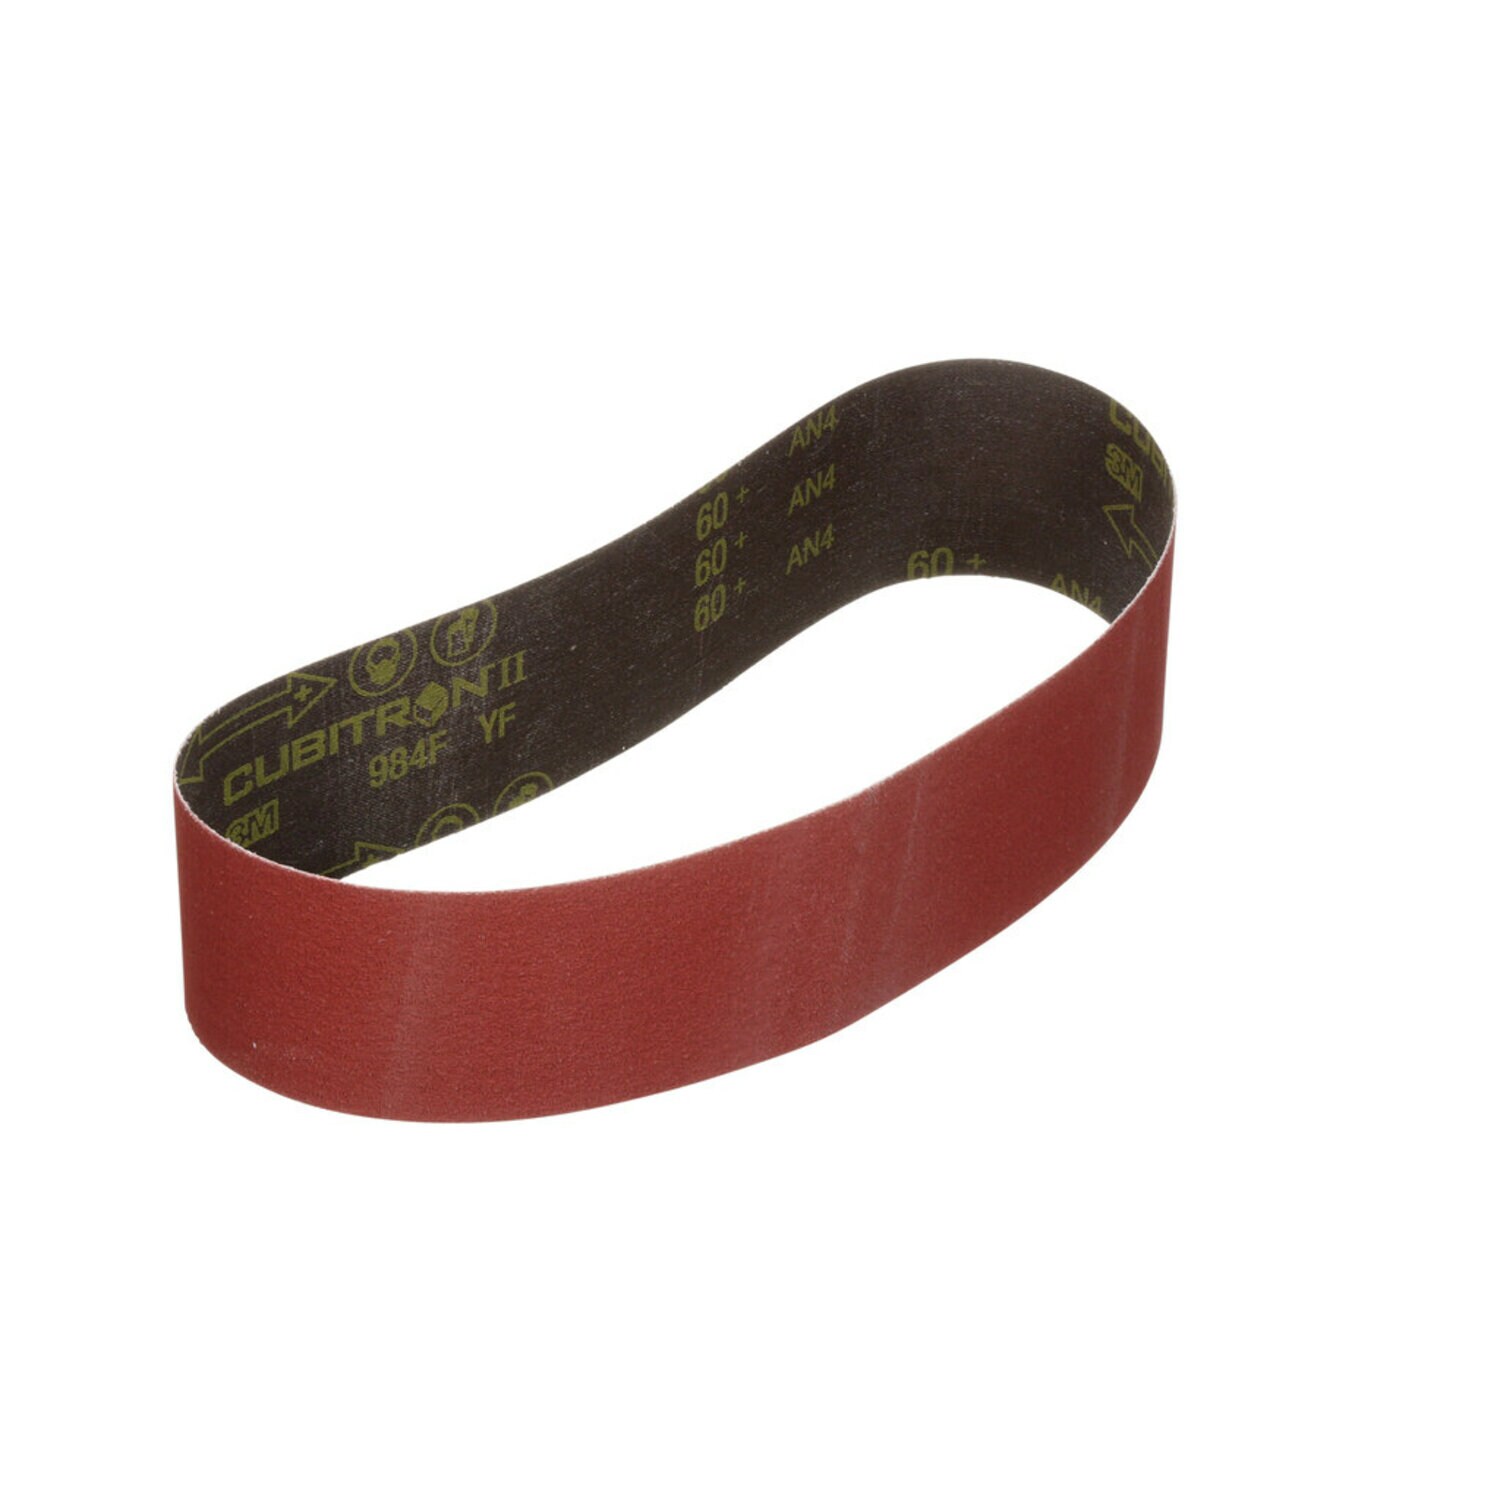 7010514612 - 3M Cubitron II Cloth Belt 984F, 80+ YF-weight, 12 in x 120 in,
Film-lok, Single-flex